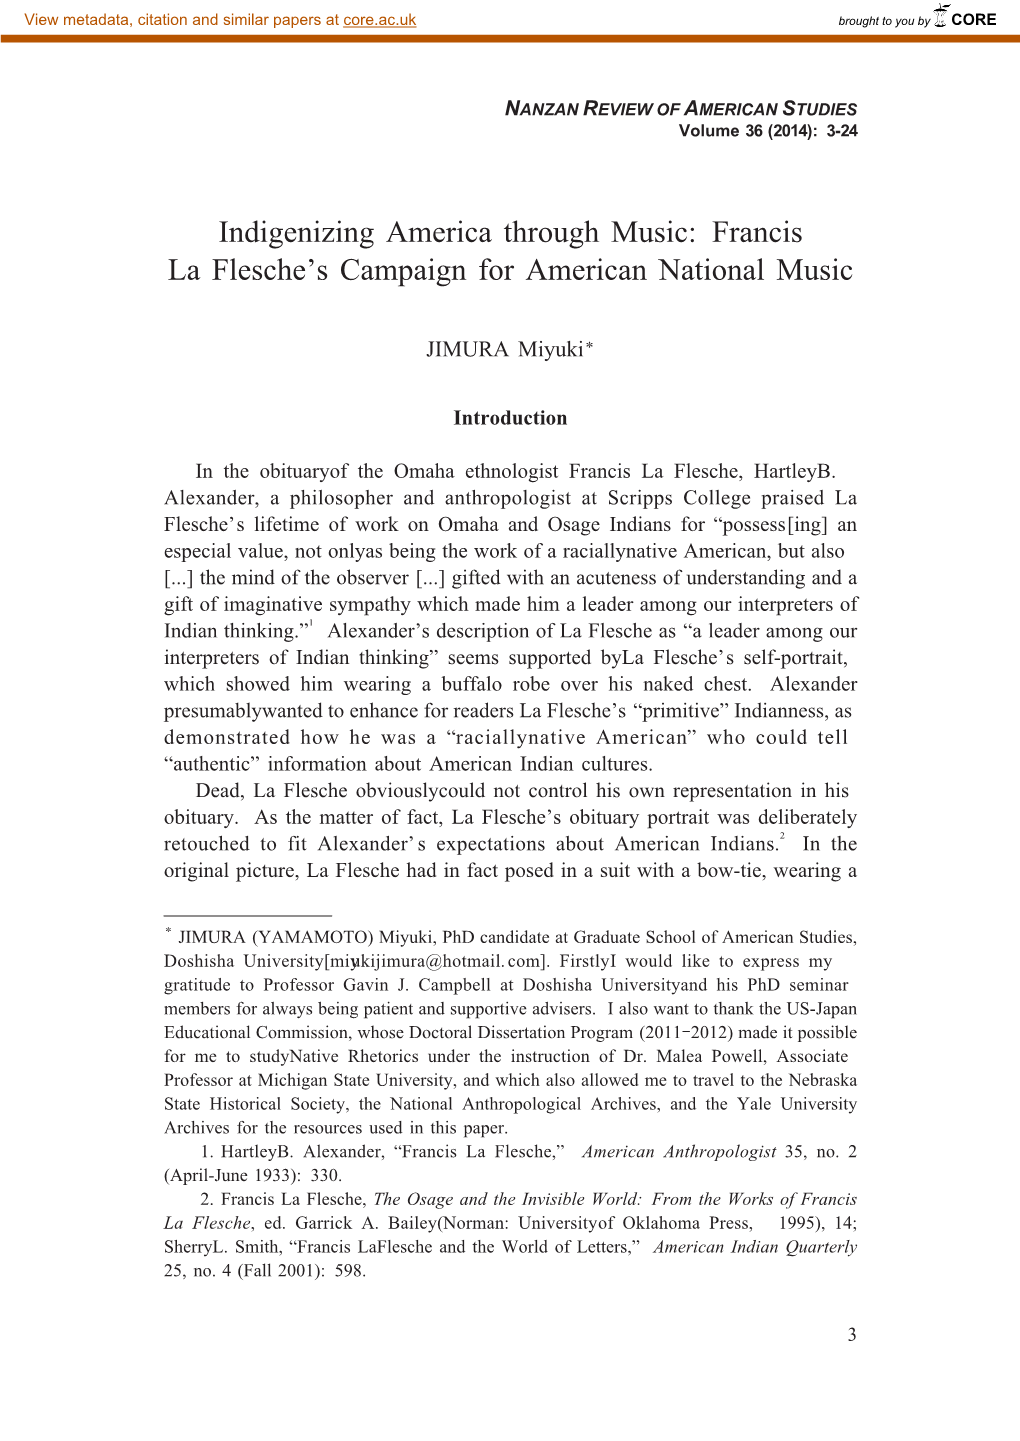 Francis La Flesche's Campaign for American National Music